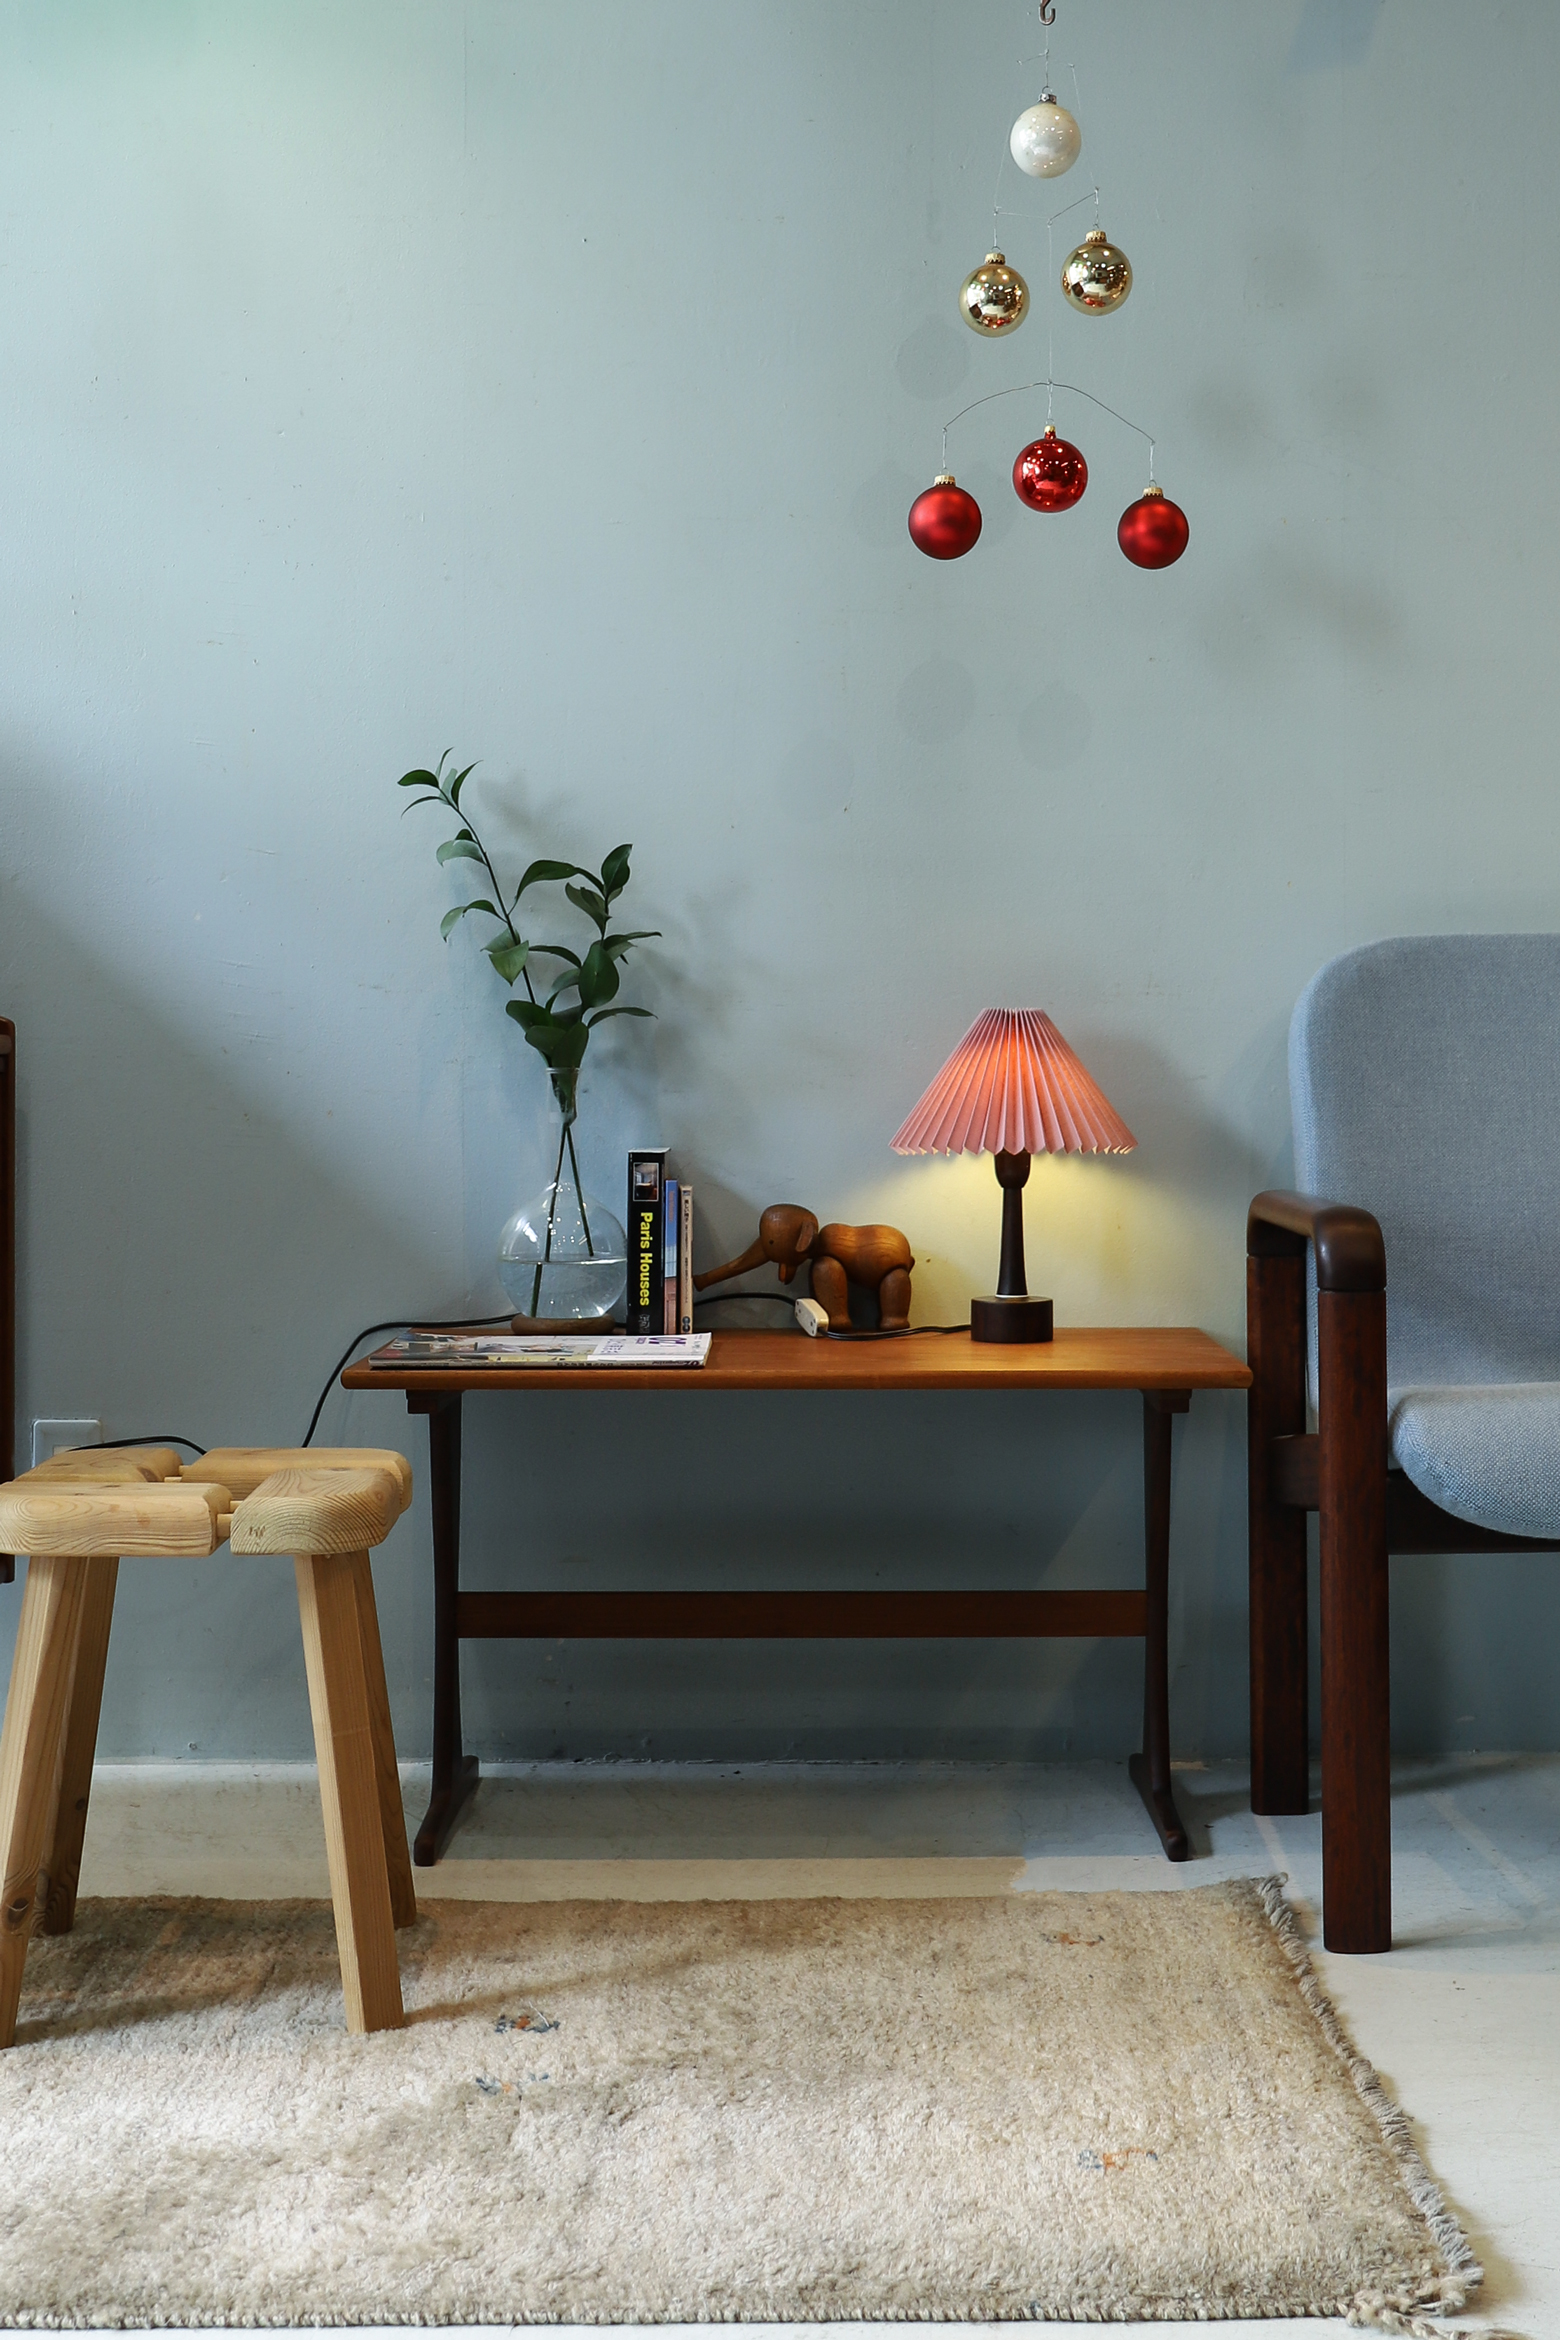 Scandinavian Modern Rosewood Table Lamp/北欧ヴィンテージ テーブルランプ ローズウッド 間接照明 インテリア ミッドセンチュリーモダン